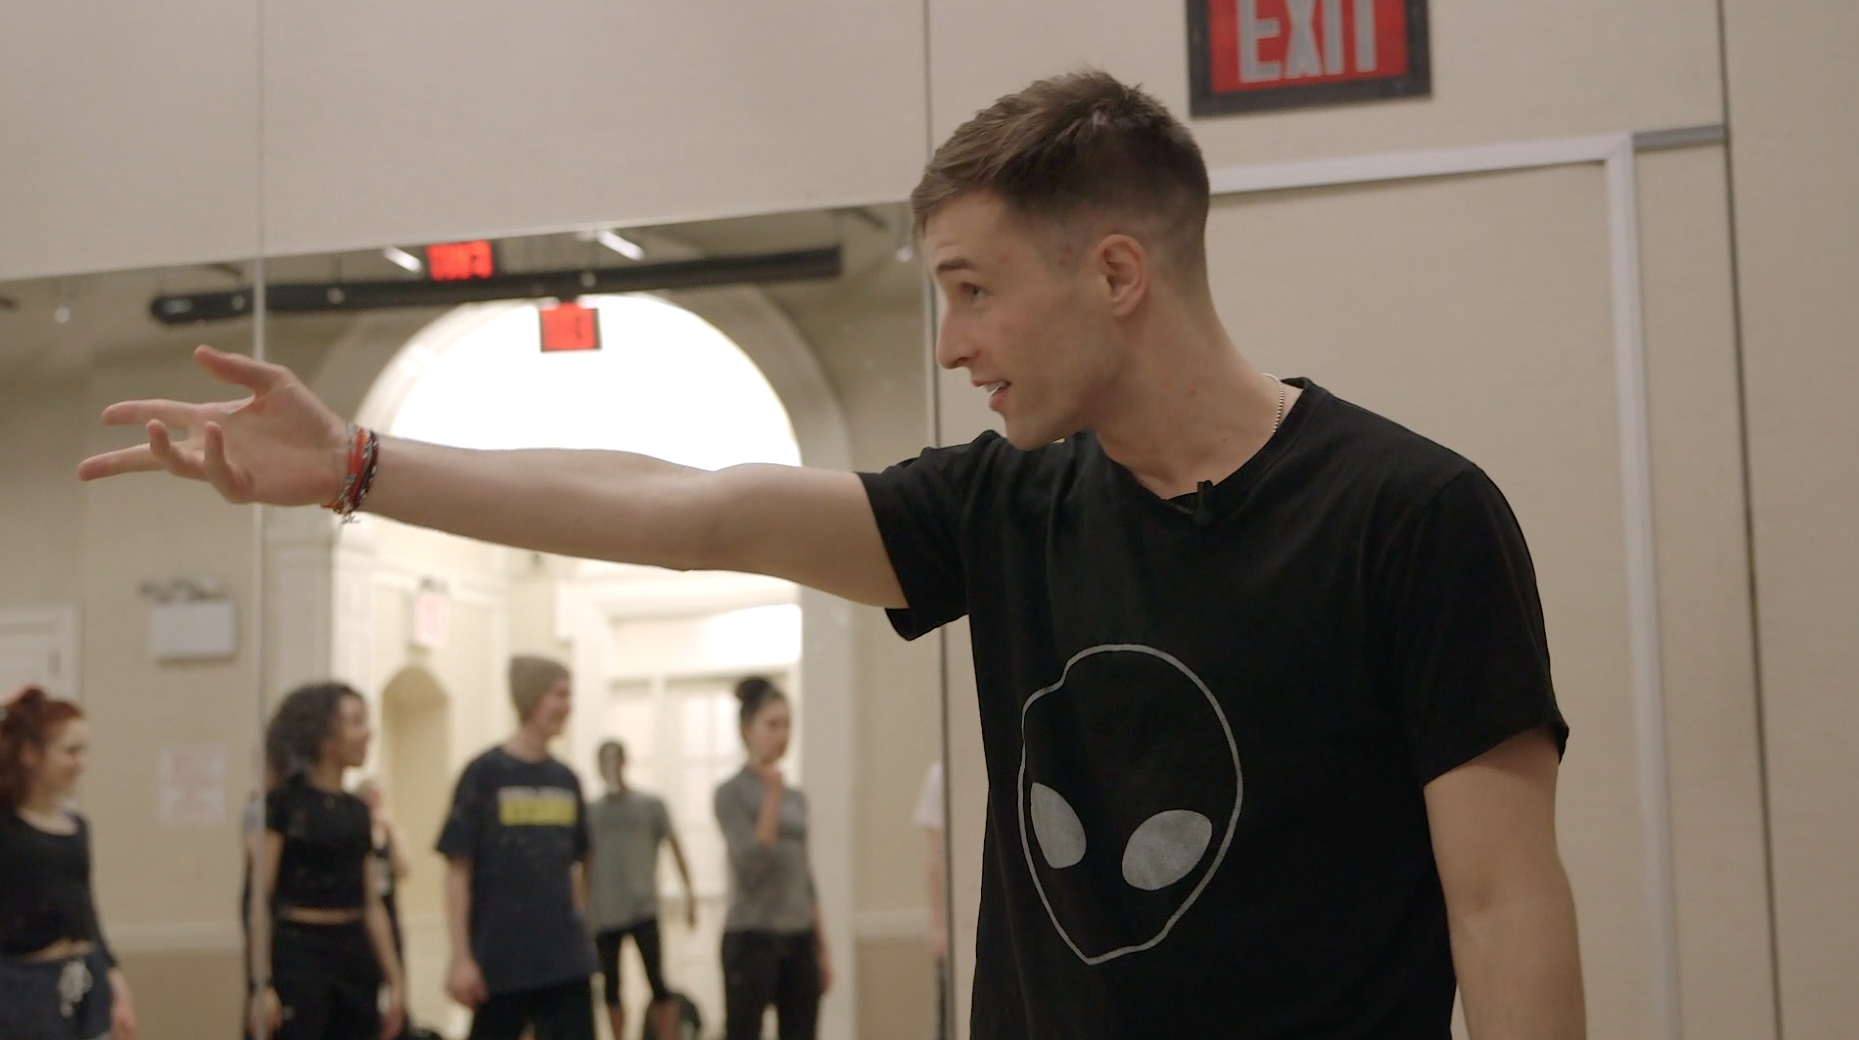 A dance teacher gestures across the room with his arm.